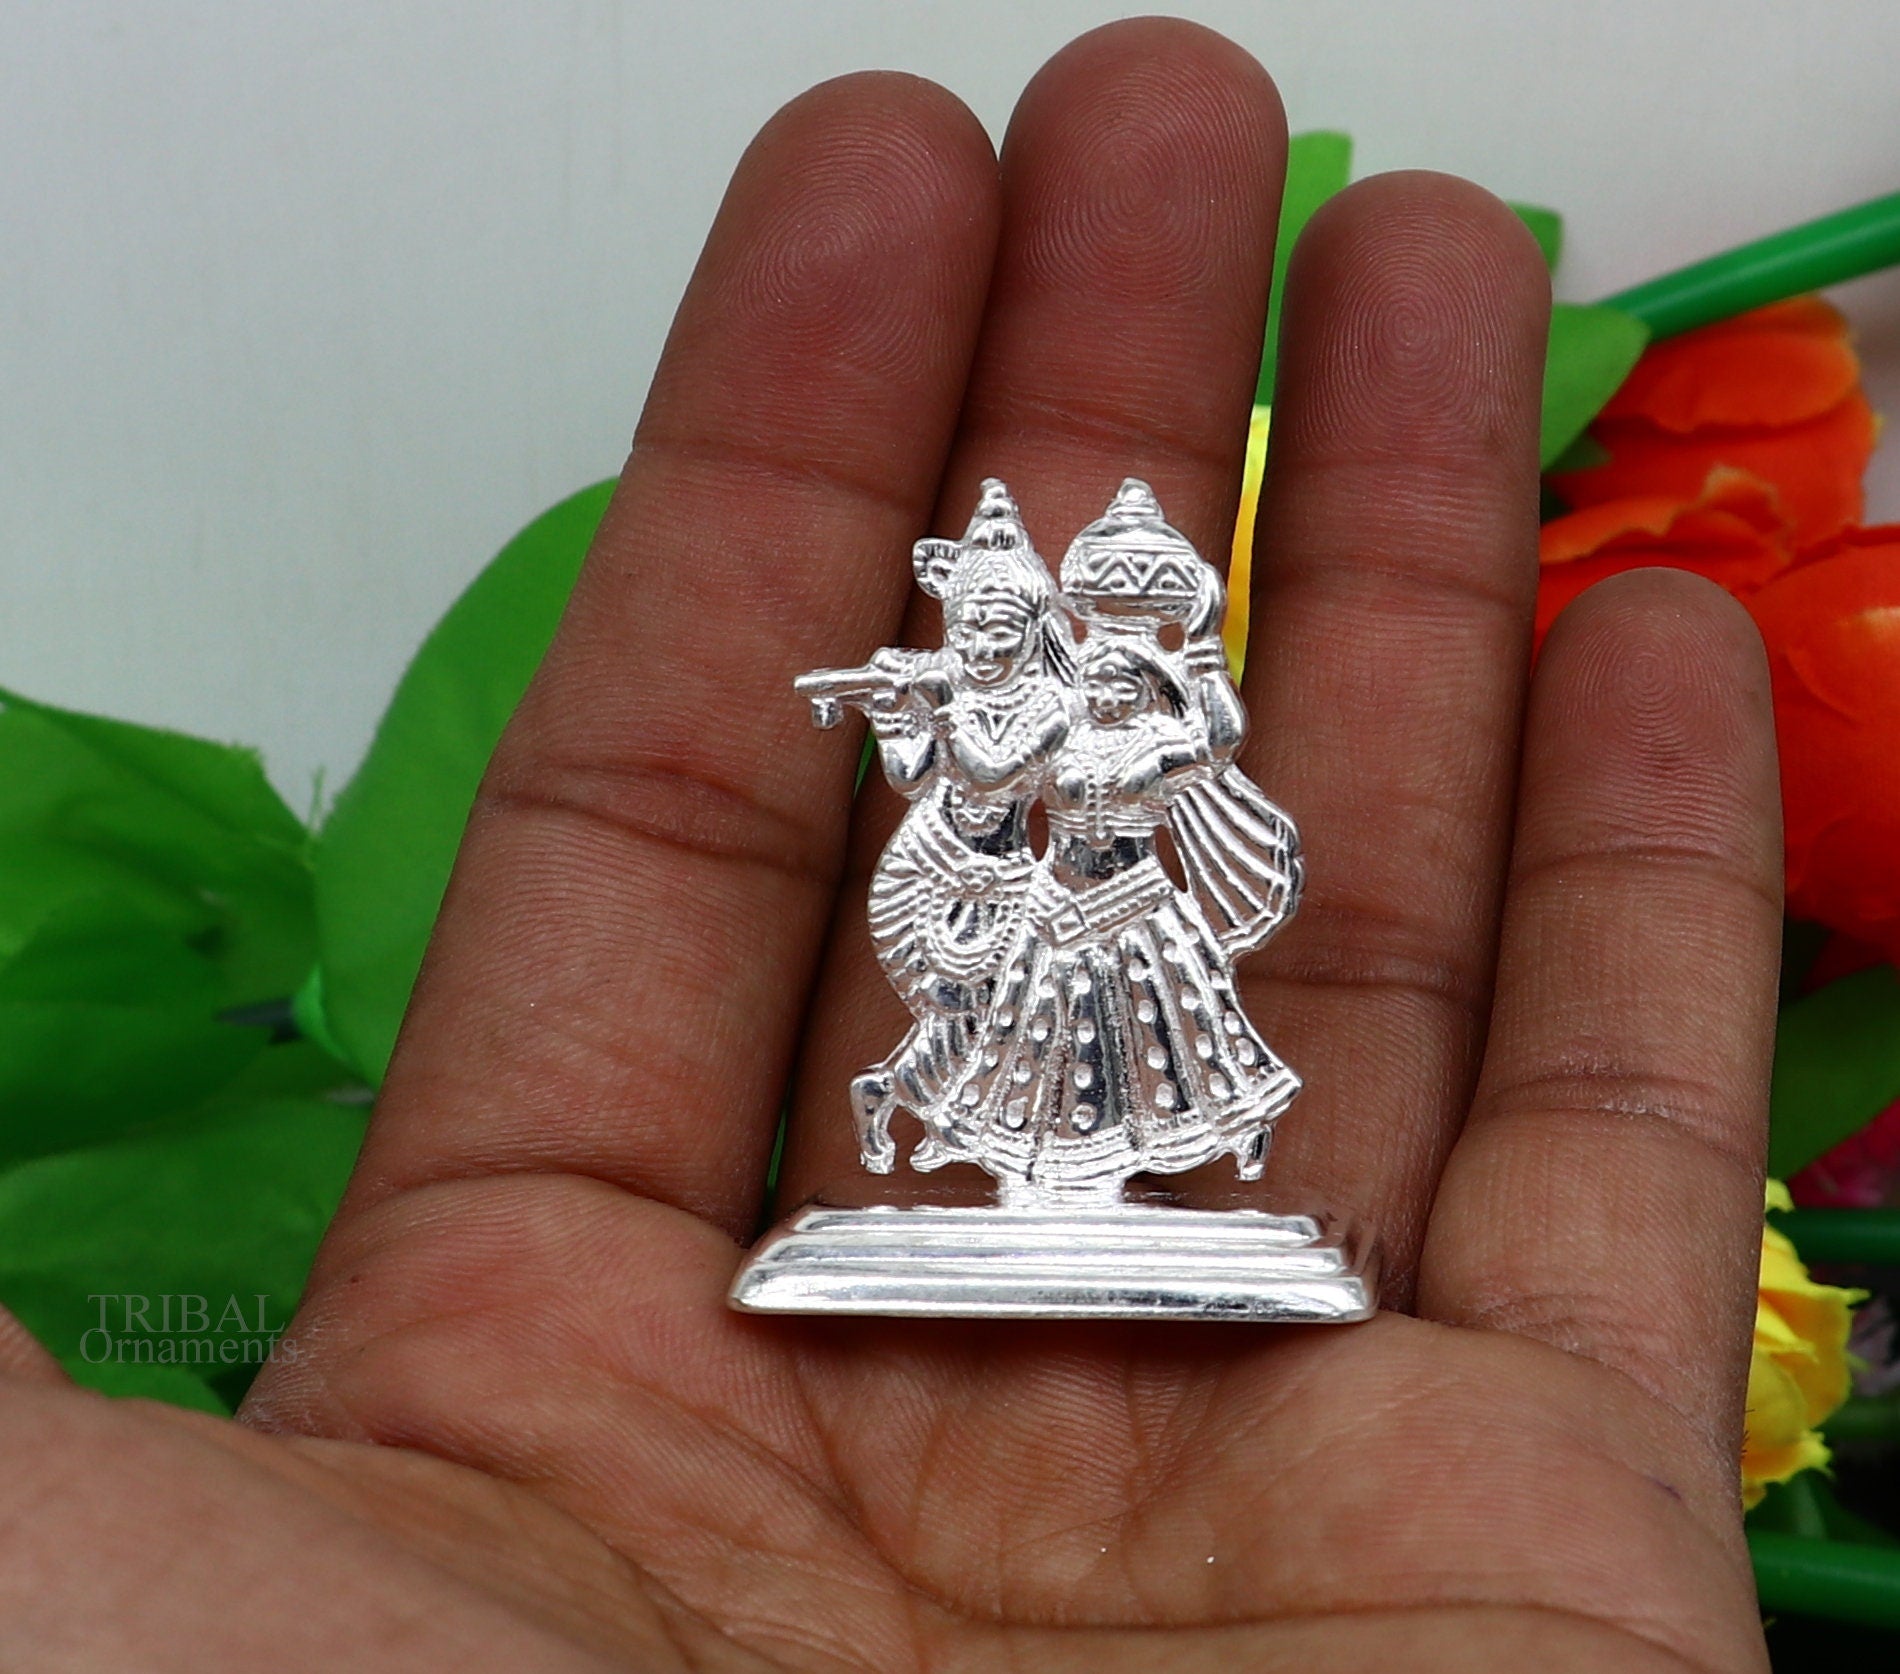 Hindu idol Radha krishna tiny statue, amazing Rasleela dancing krishna and Radha, lord krishna figurine, love article to gift her art491 - TRIBAL ORNAMENTS